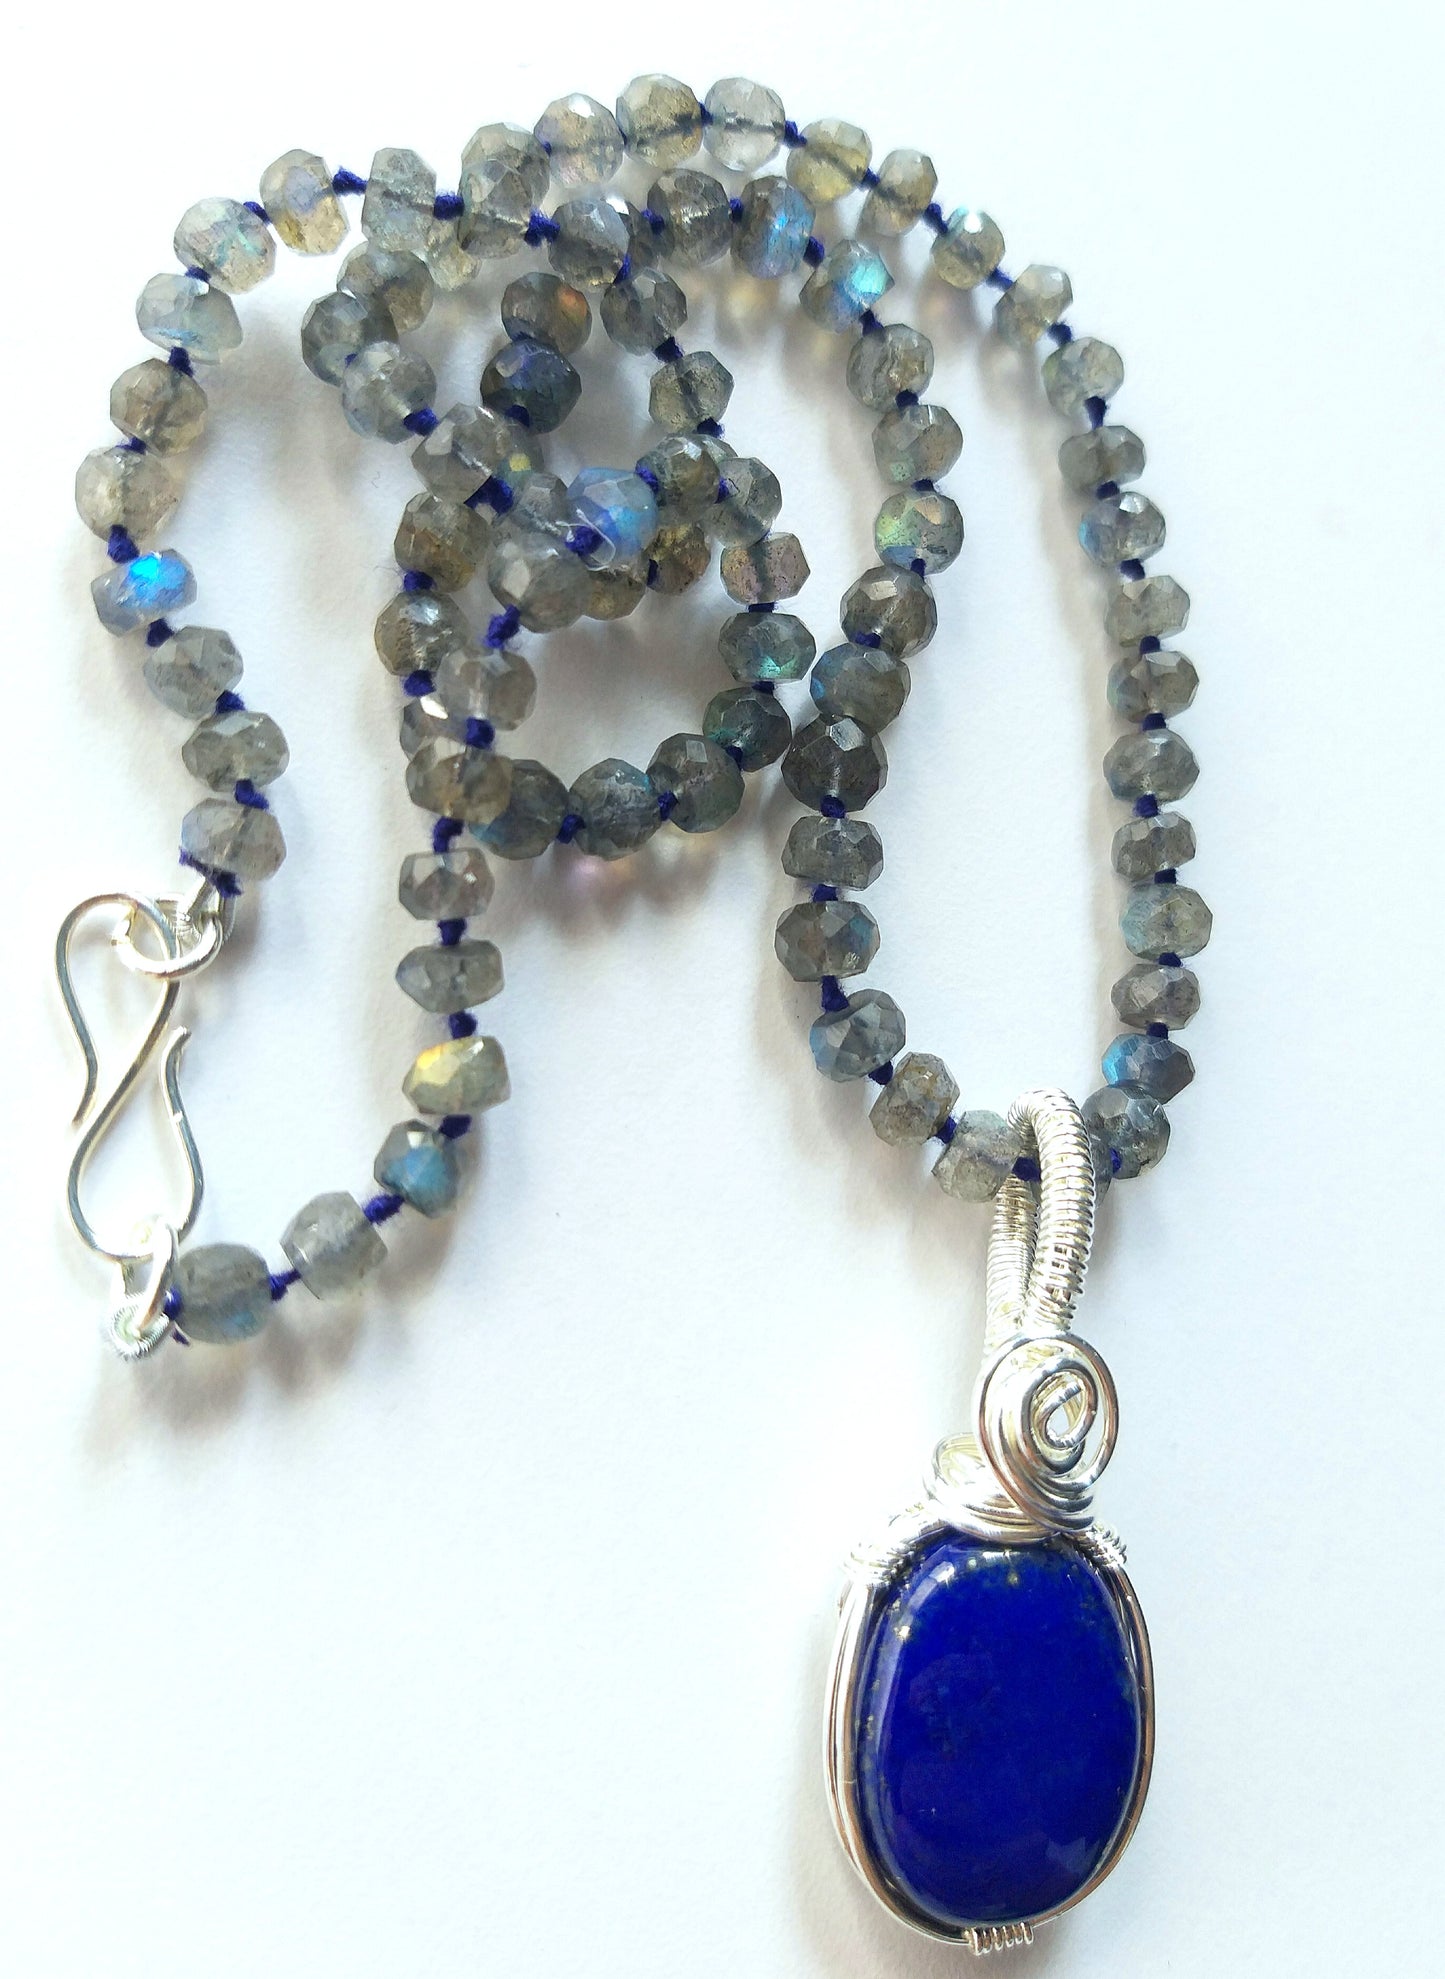 Natural Lapis Lazuli Pendant and Labradorite Beads Necklace